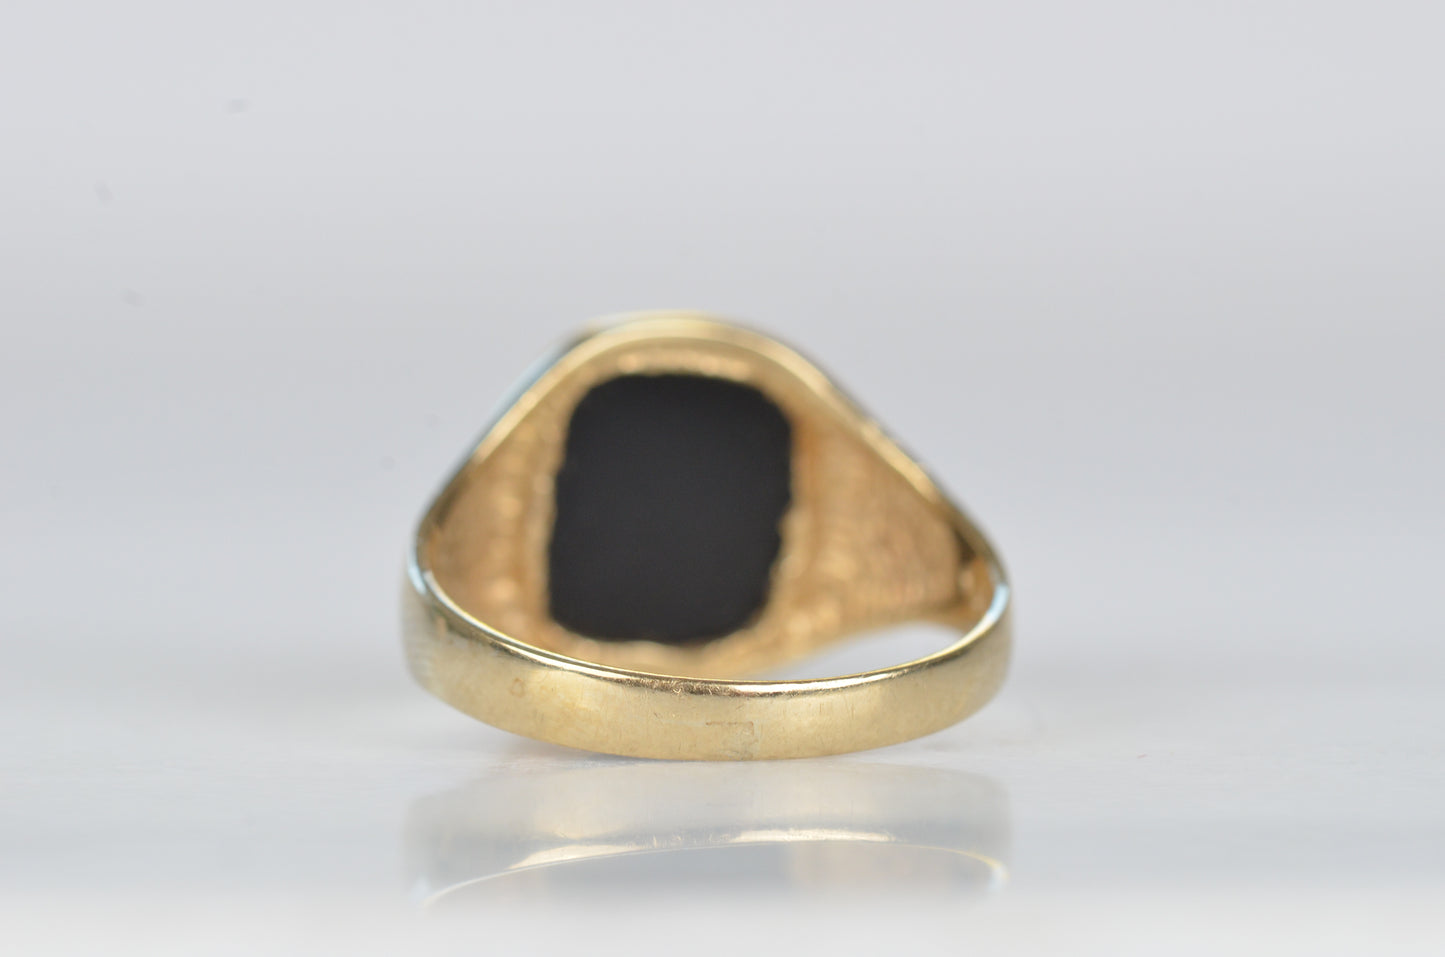 Striking Vintage Onyx Signet Ring